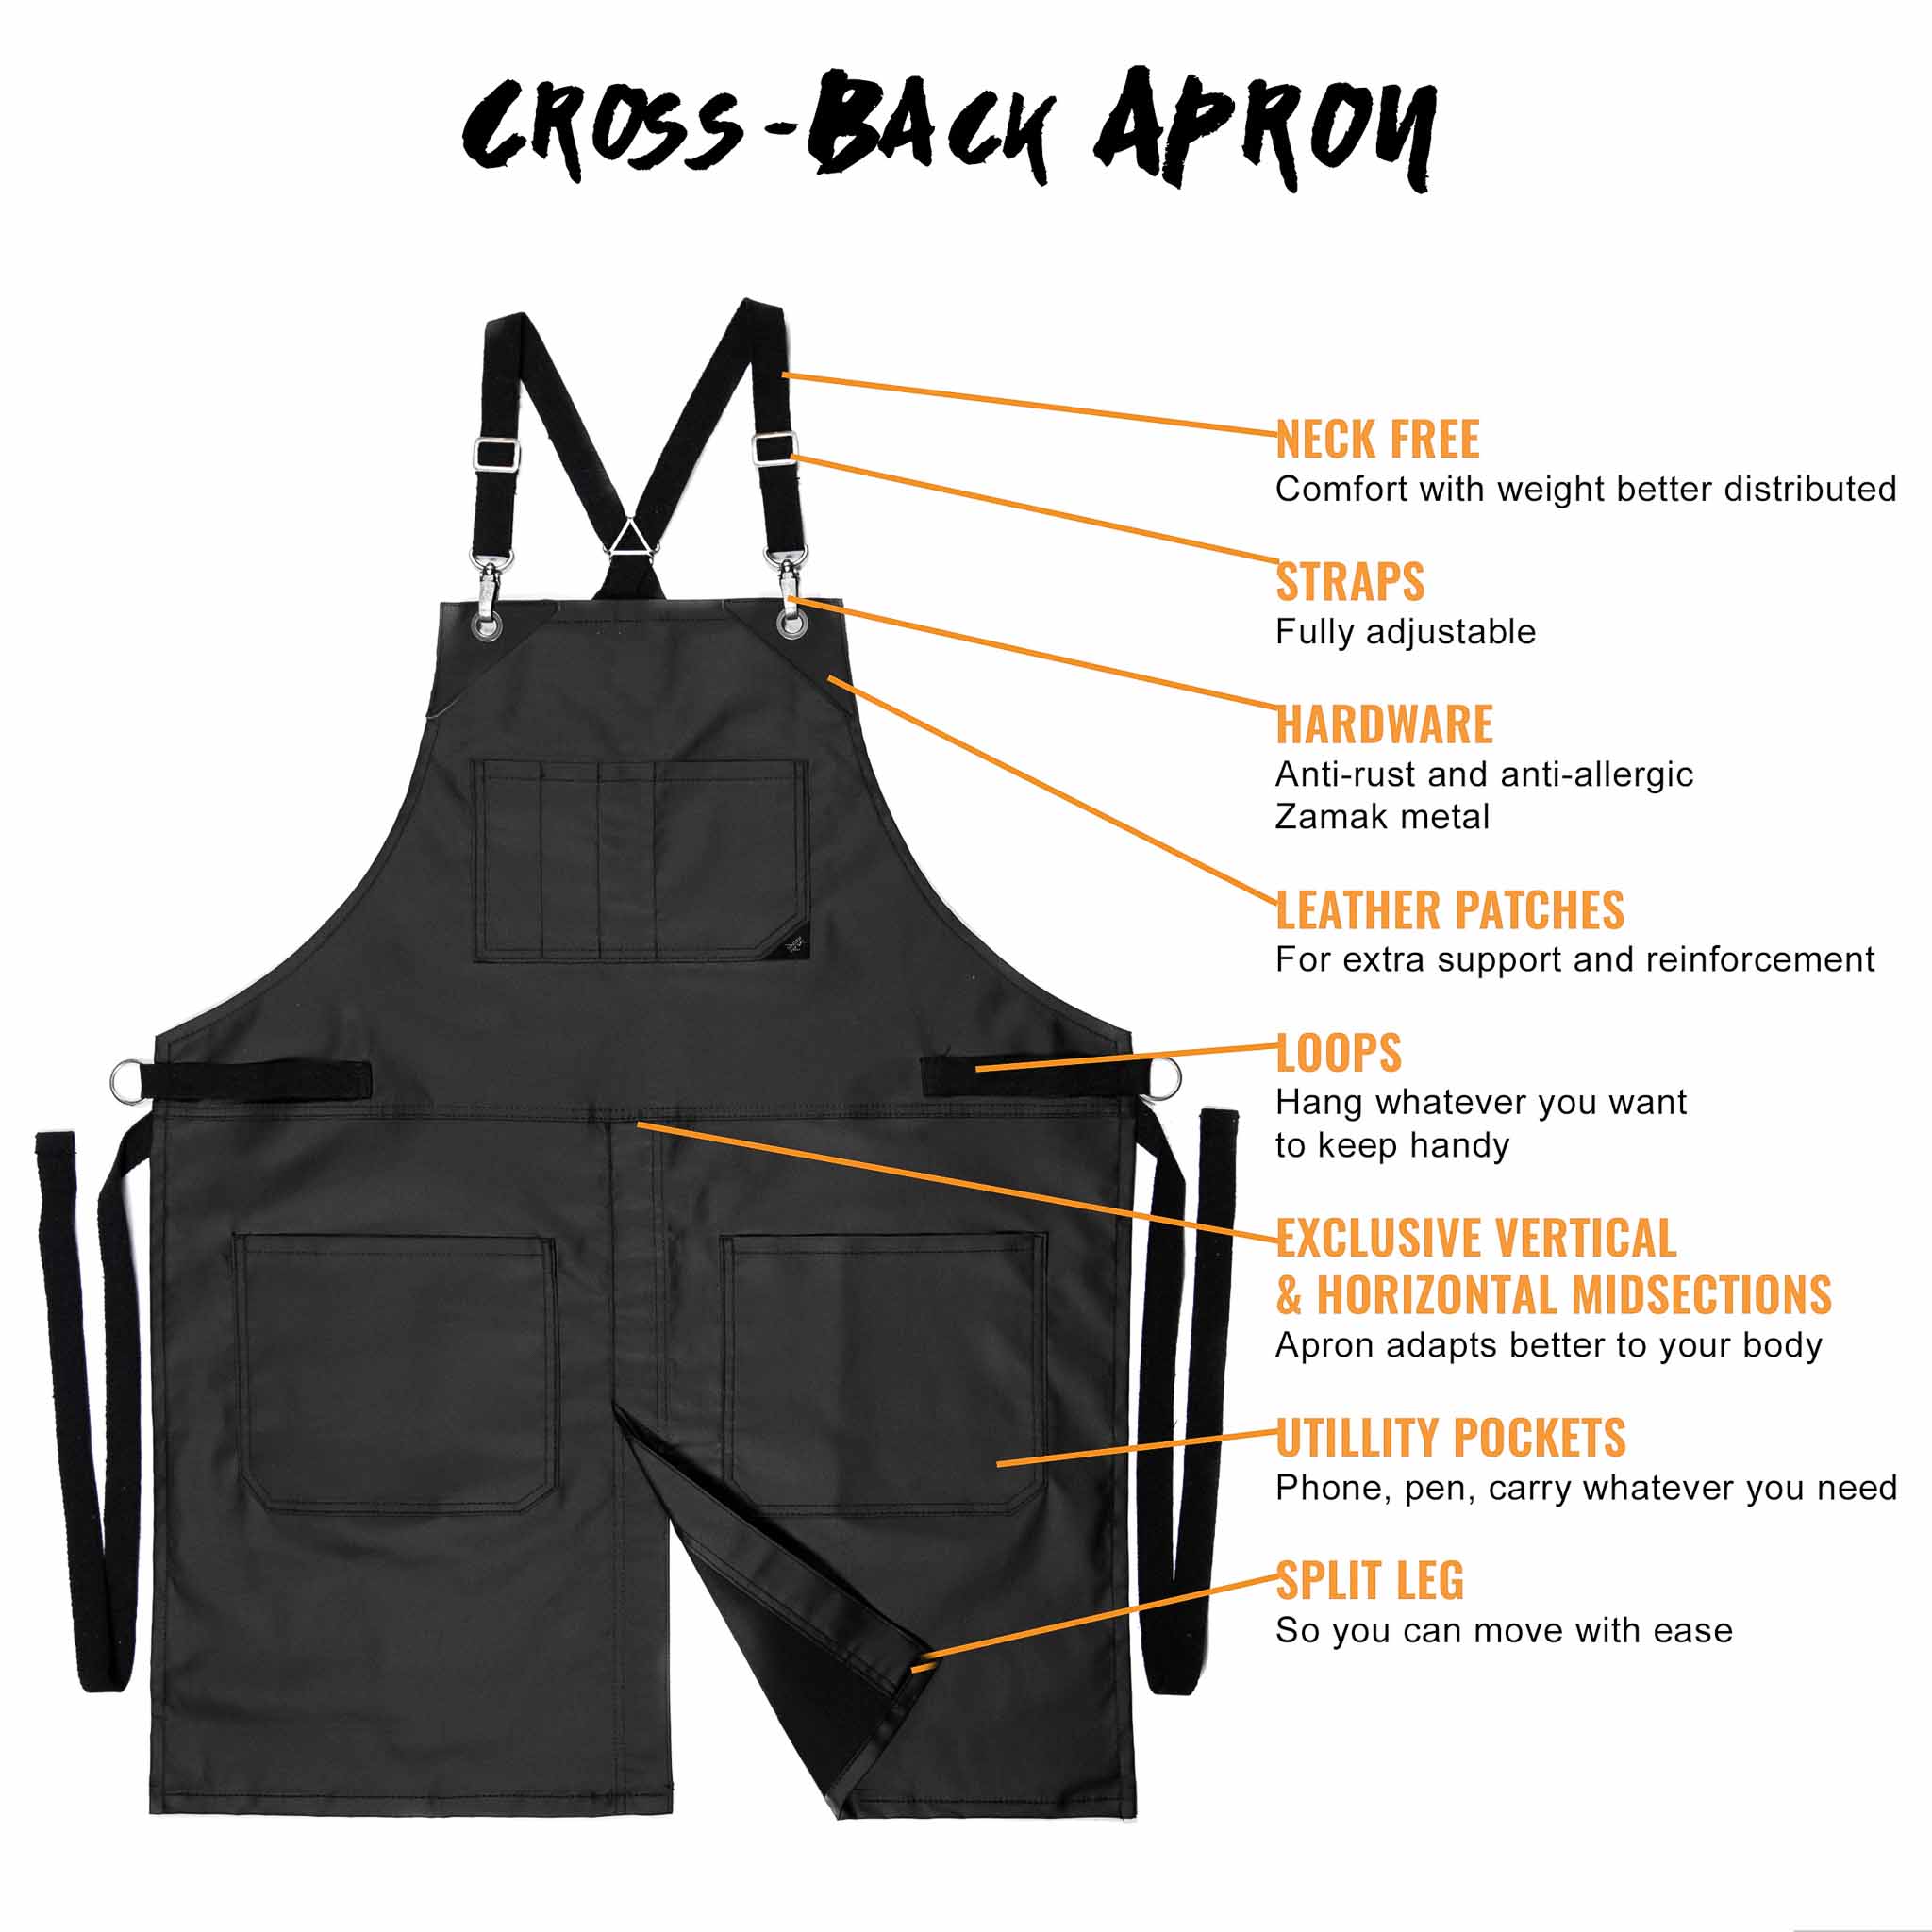 Salon Apron - CrossBack, Water Resistant, Adjustable, SplitLeg